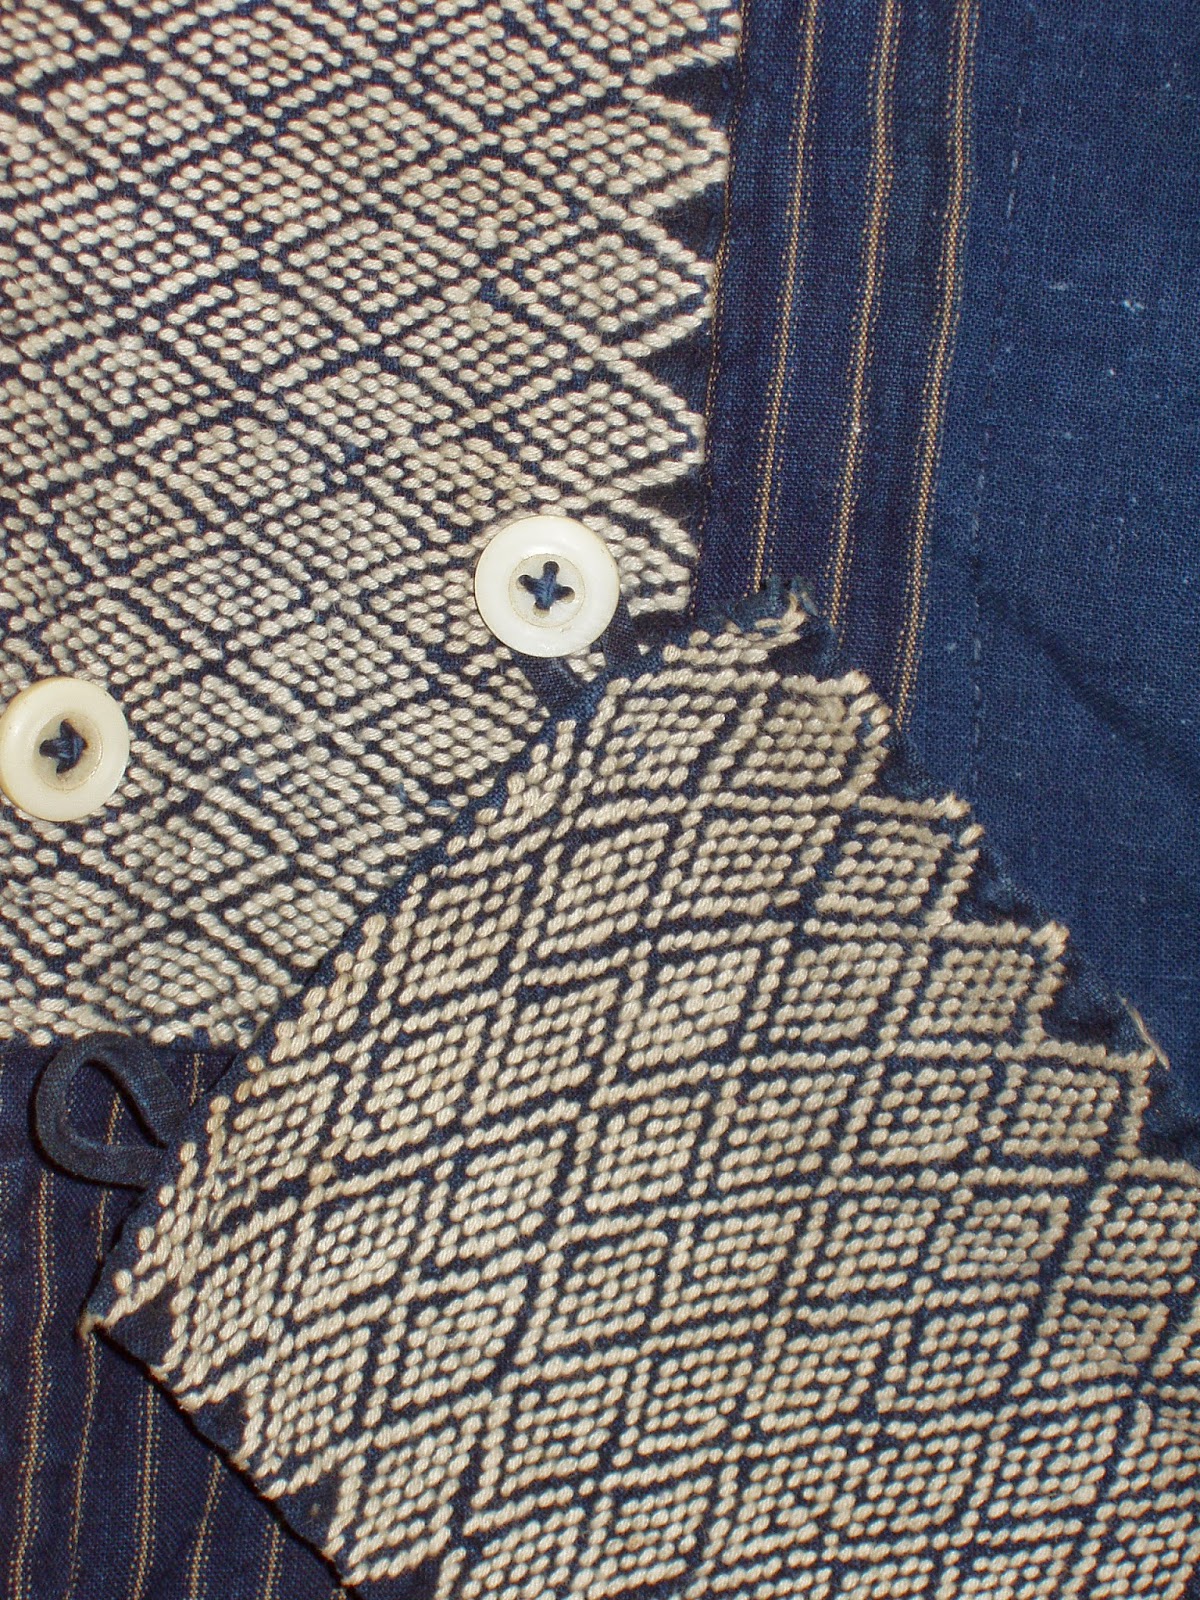 sashiko and other stitching: Sashiko, chikuchiku and boromono